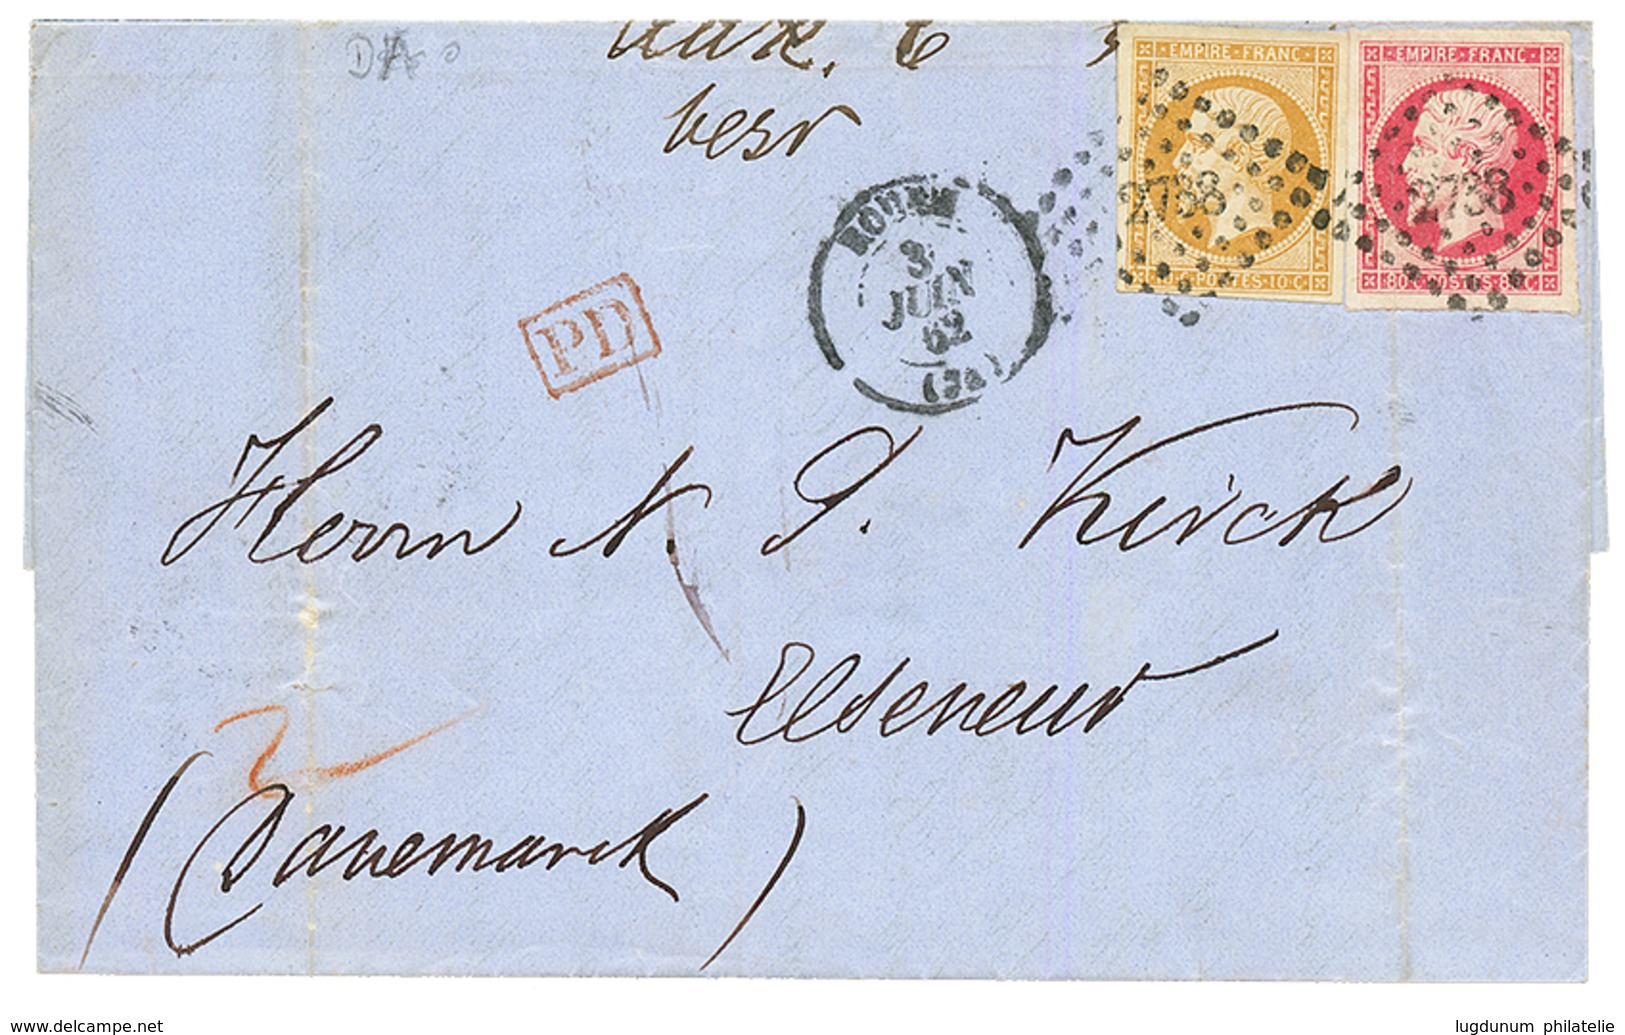 "90c Pour Le DANEMARK" : 1862 10c(n°13) + 80c (n°17) Pli Obl. PC 2738 + T.15 ROUEN Pour ELSENEUR (DANEMARK). TB. - 1849-1876: Periodo Clásico